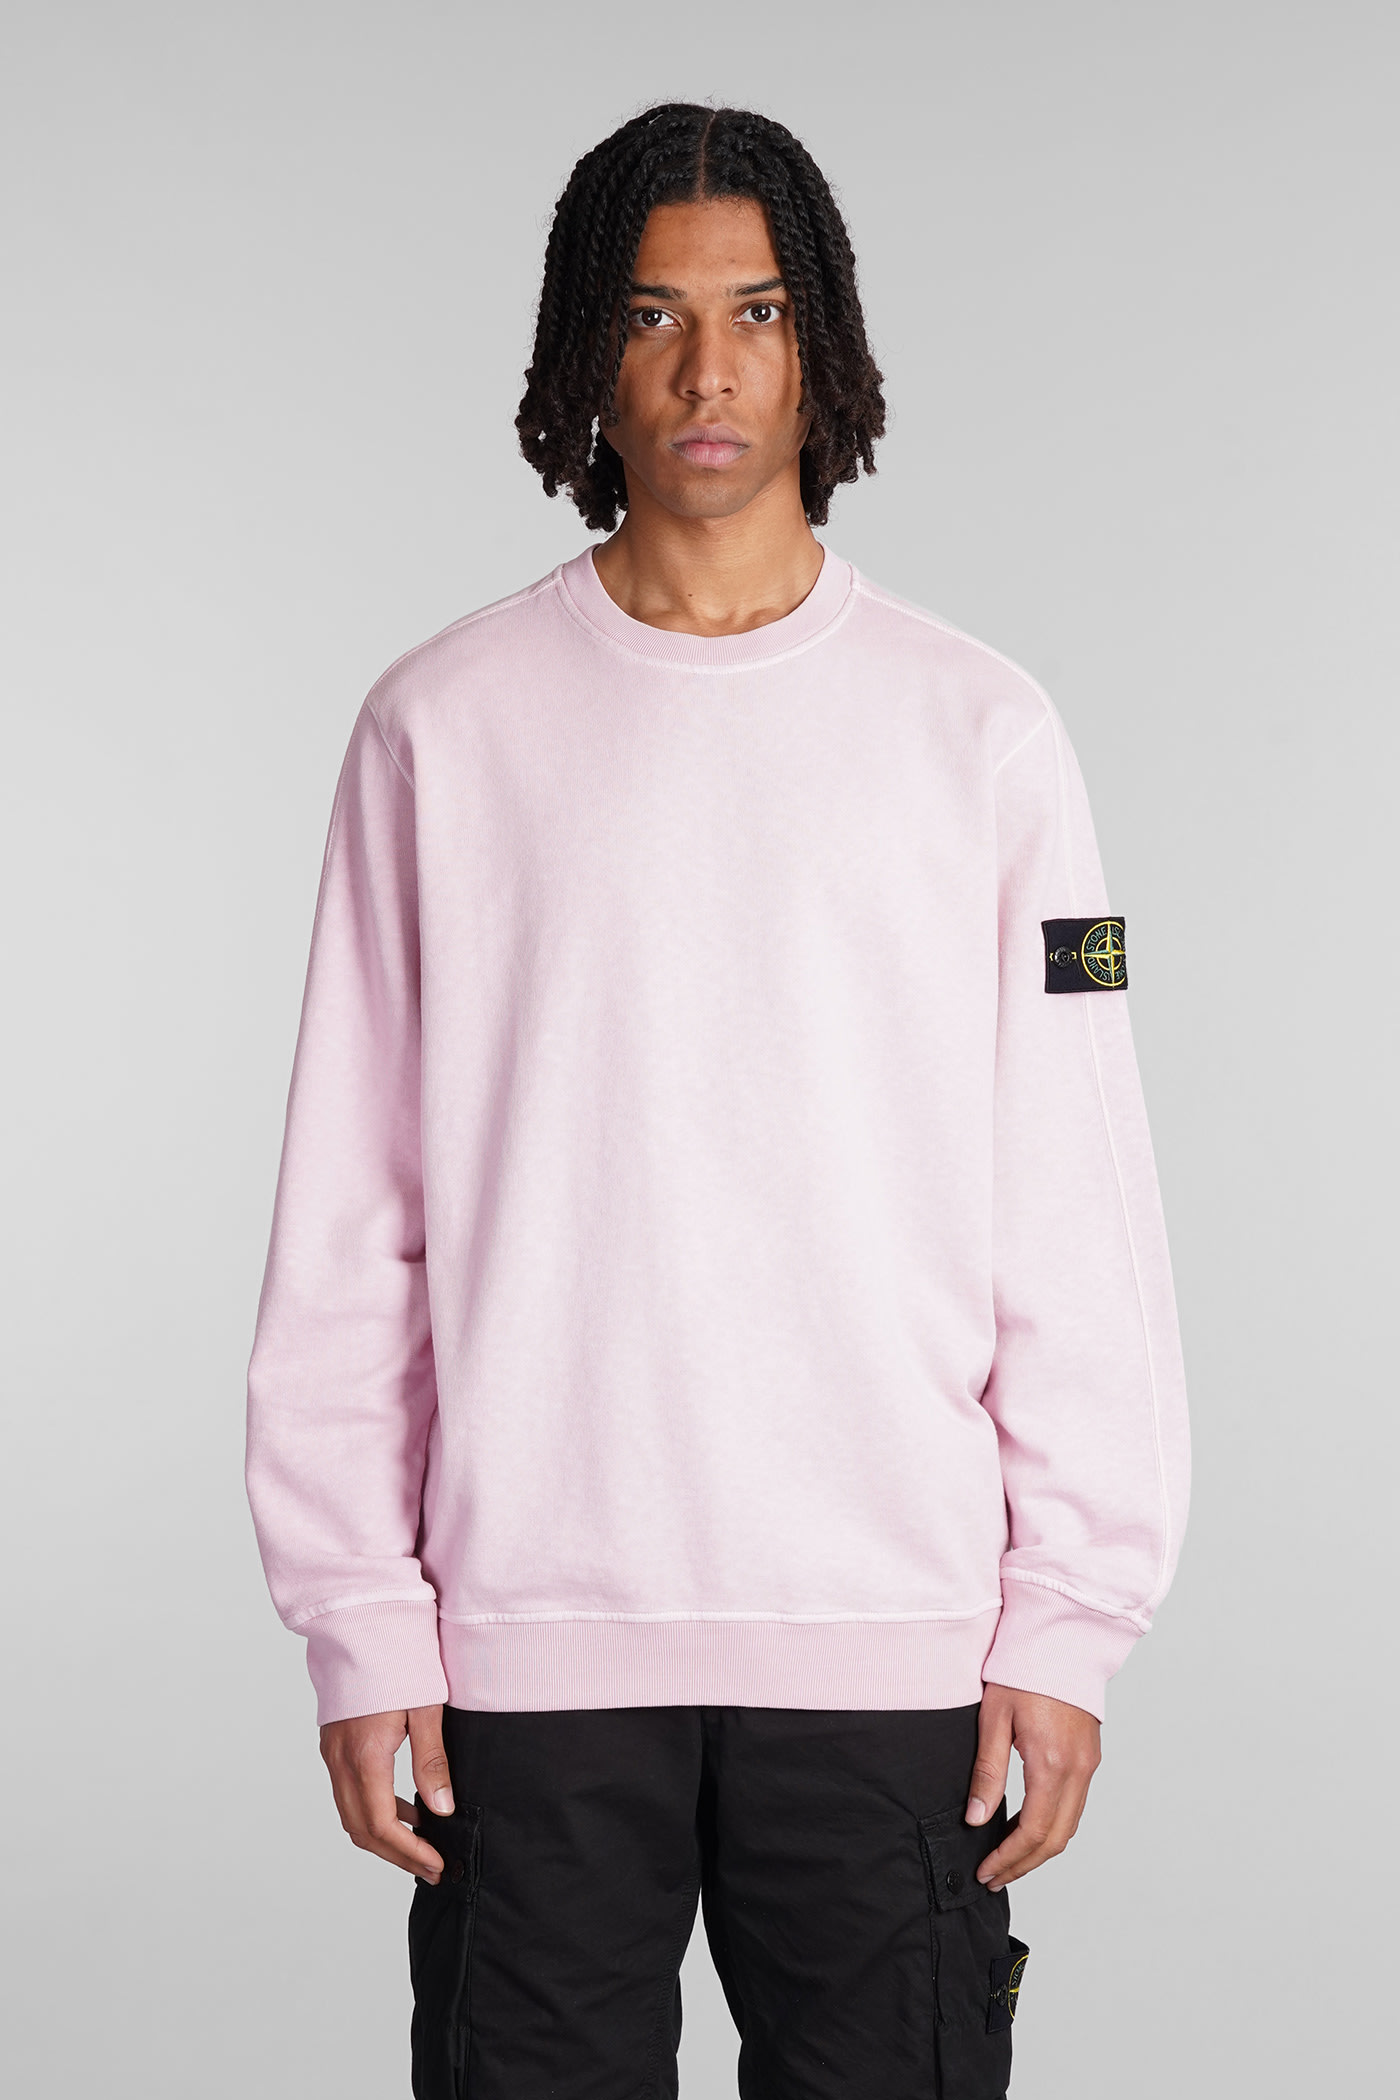 Stone Island Sweatshirt In Rose-pink Cotton